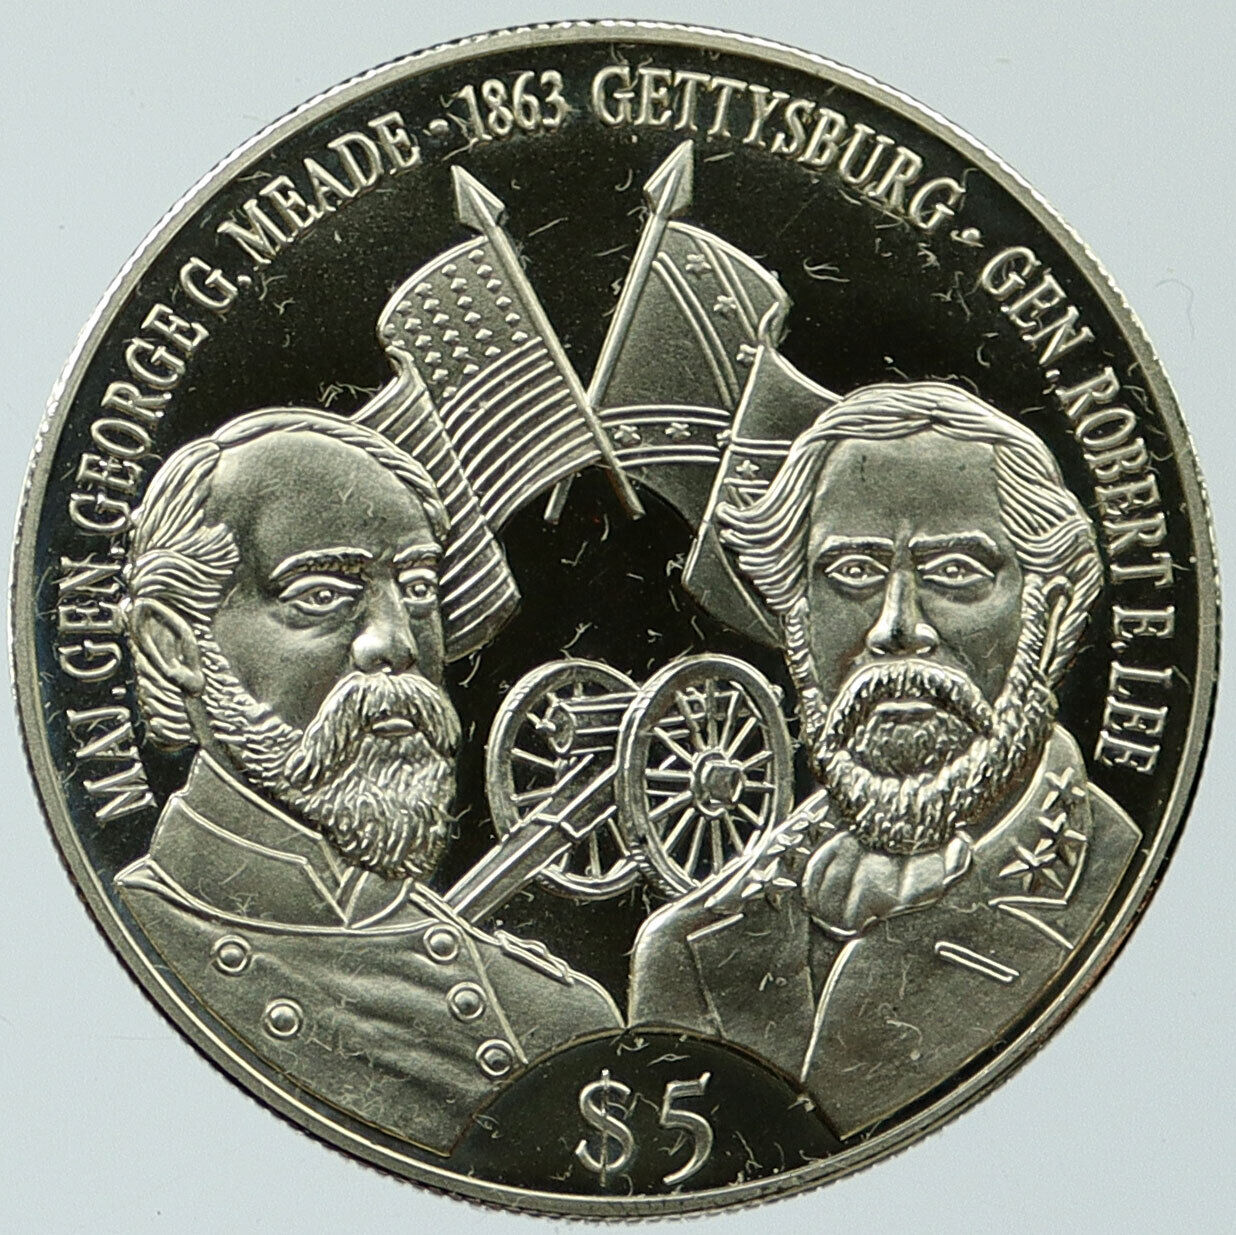 1999 LIBERIA GETTYSBURG GENERALS LEE & MEADE Old Proof 5 Dollar Coin i117453